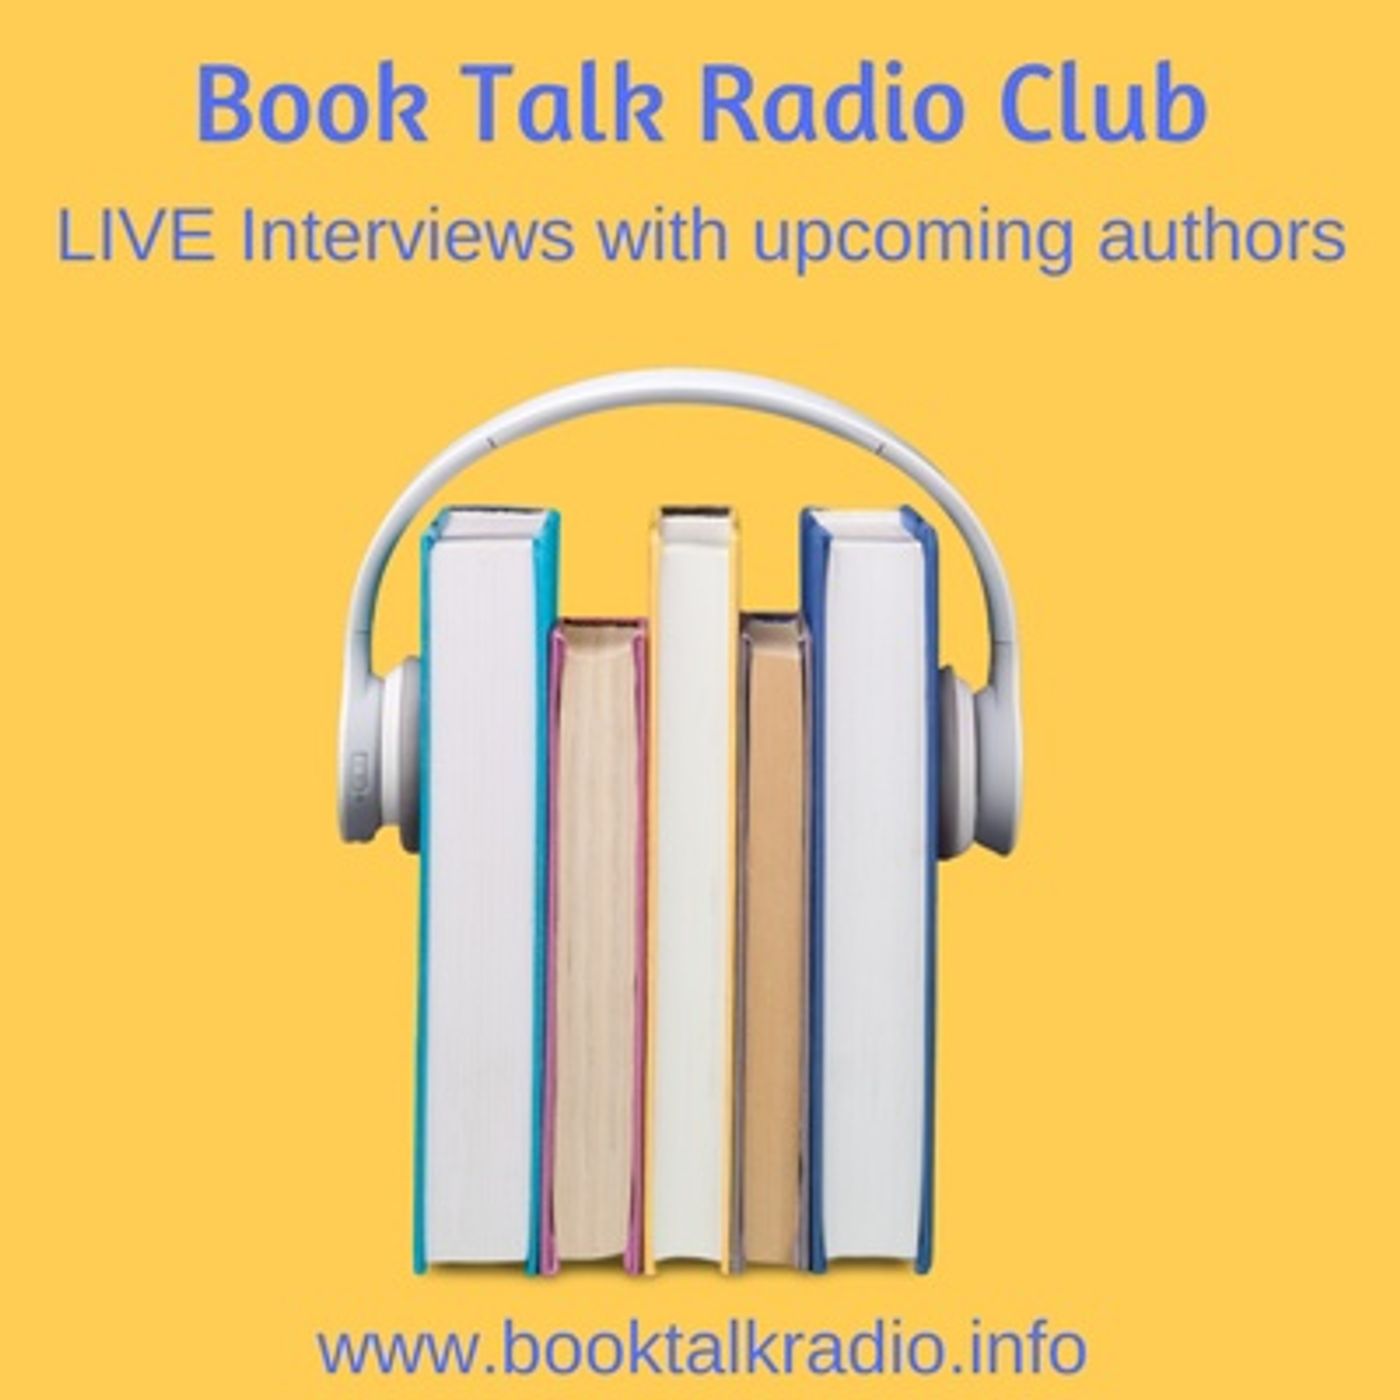 Book Talk Radio Club's show